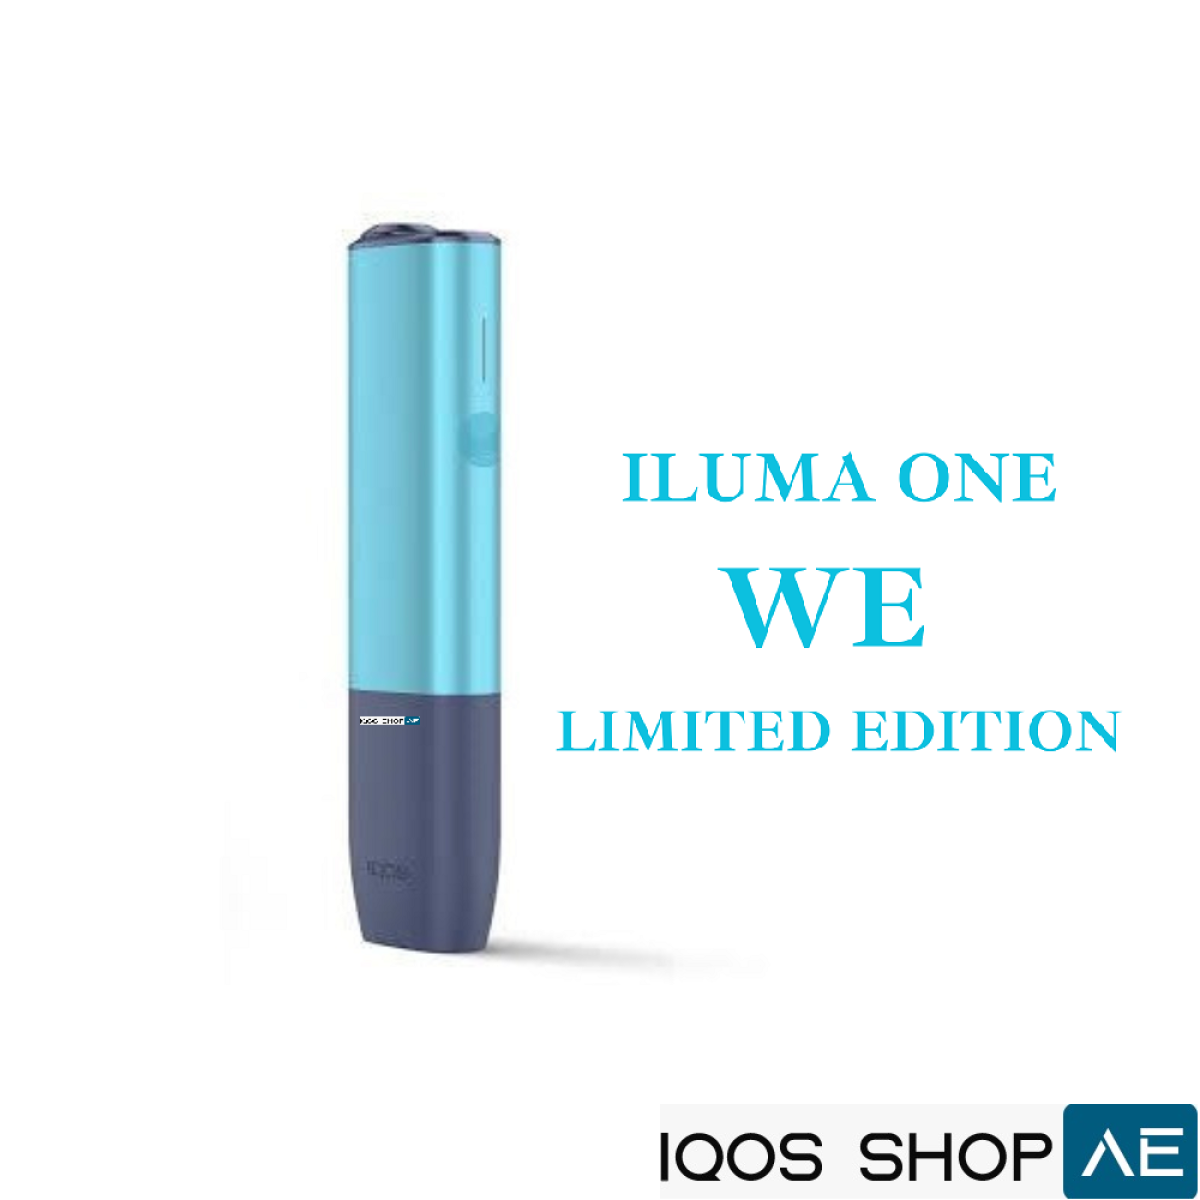 IQOS ILUMA PRIME WE ( Limited Edition) 2023 – Heets Escape